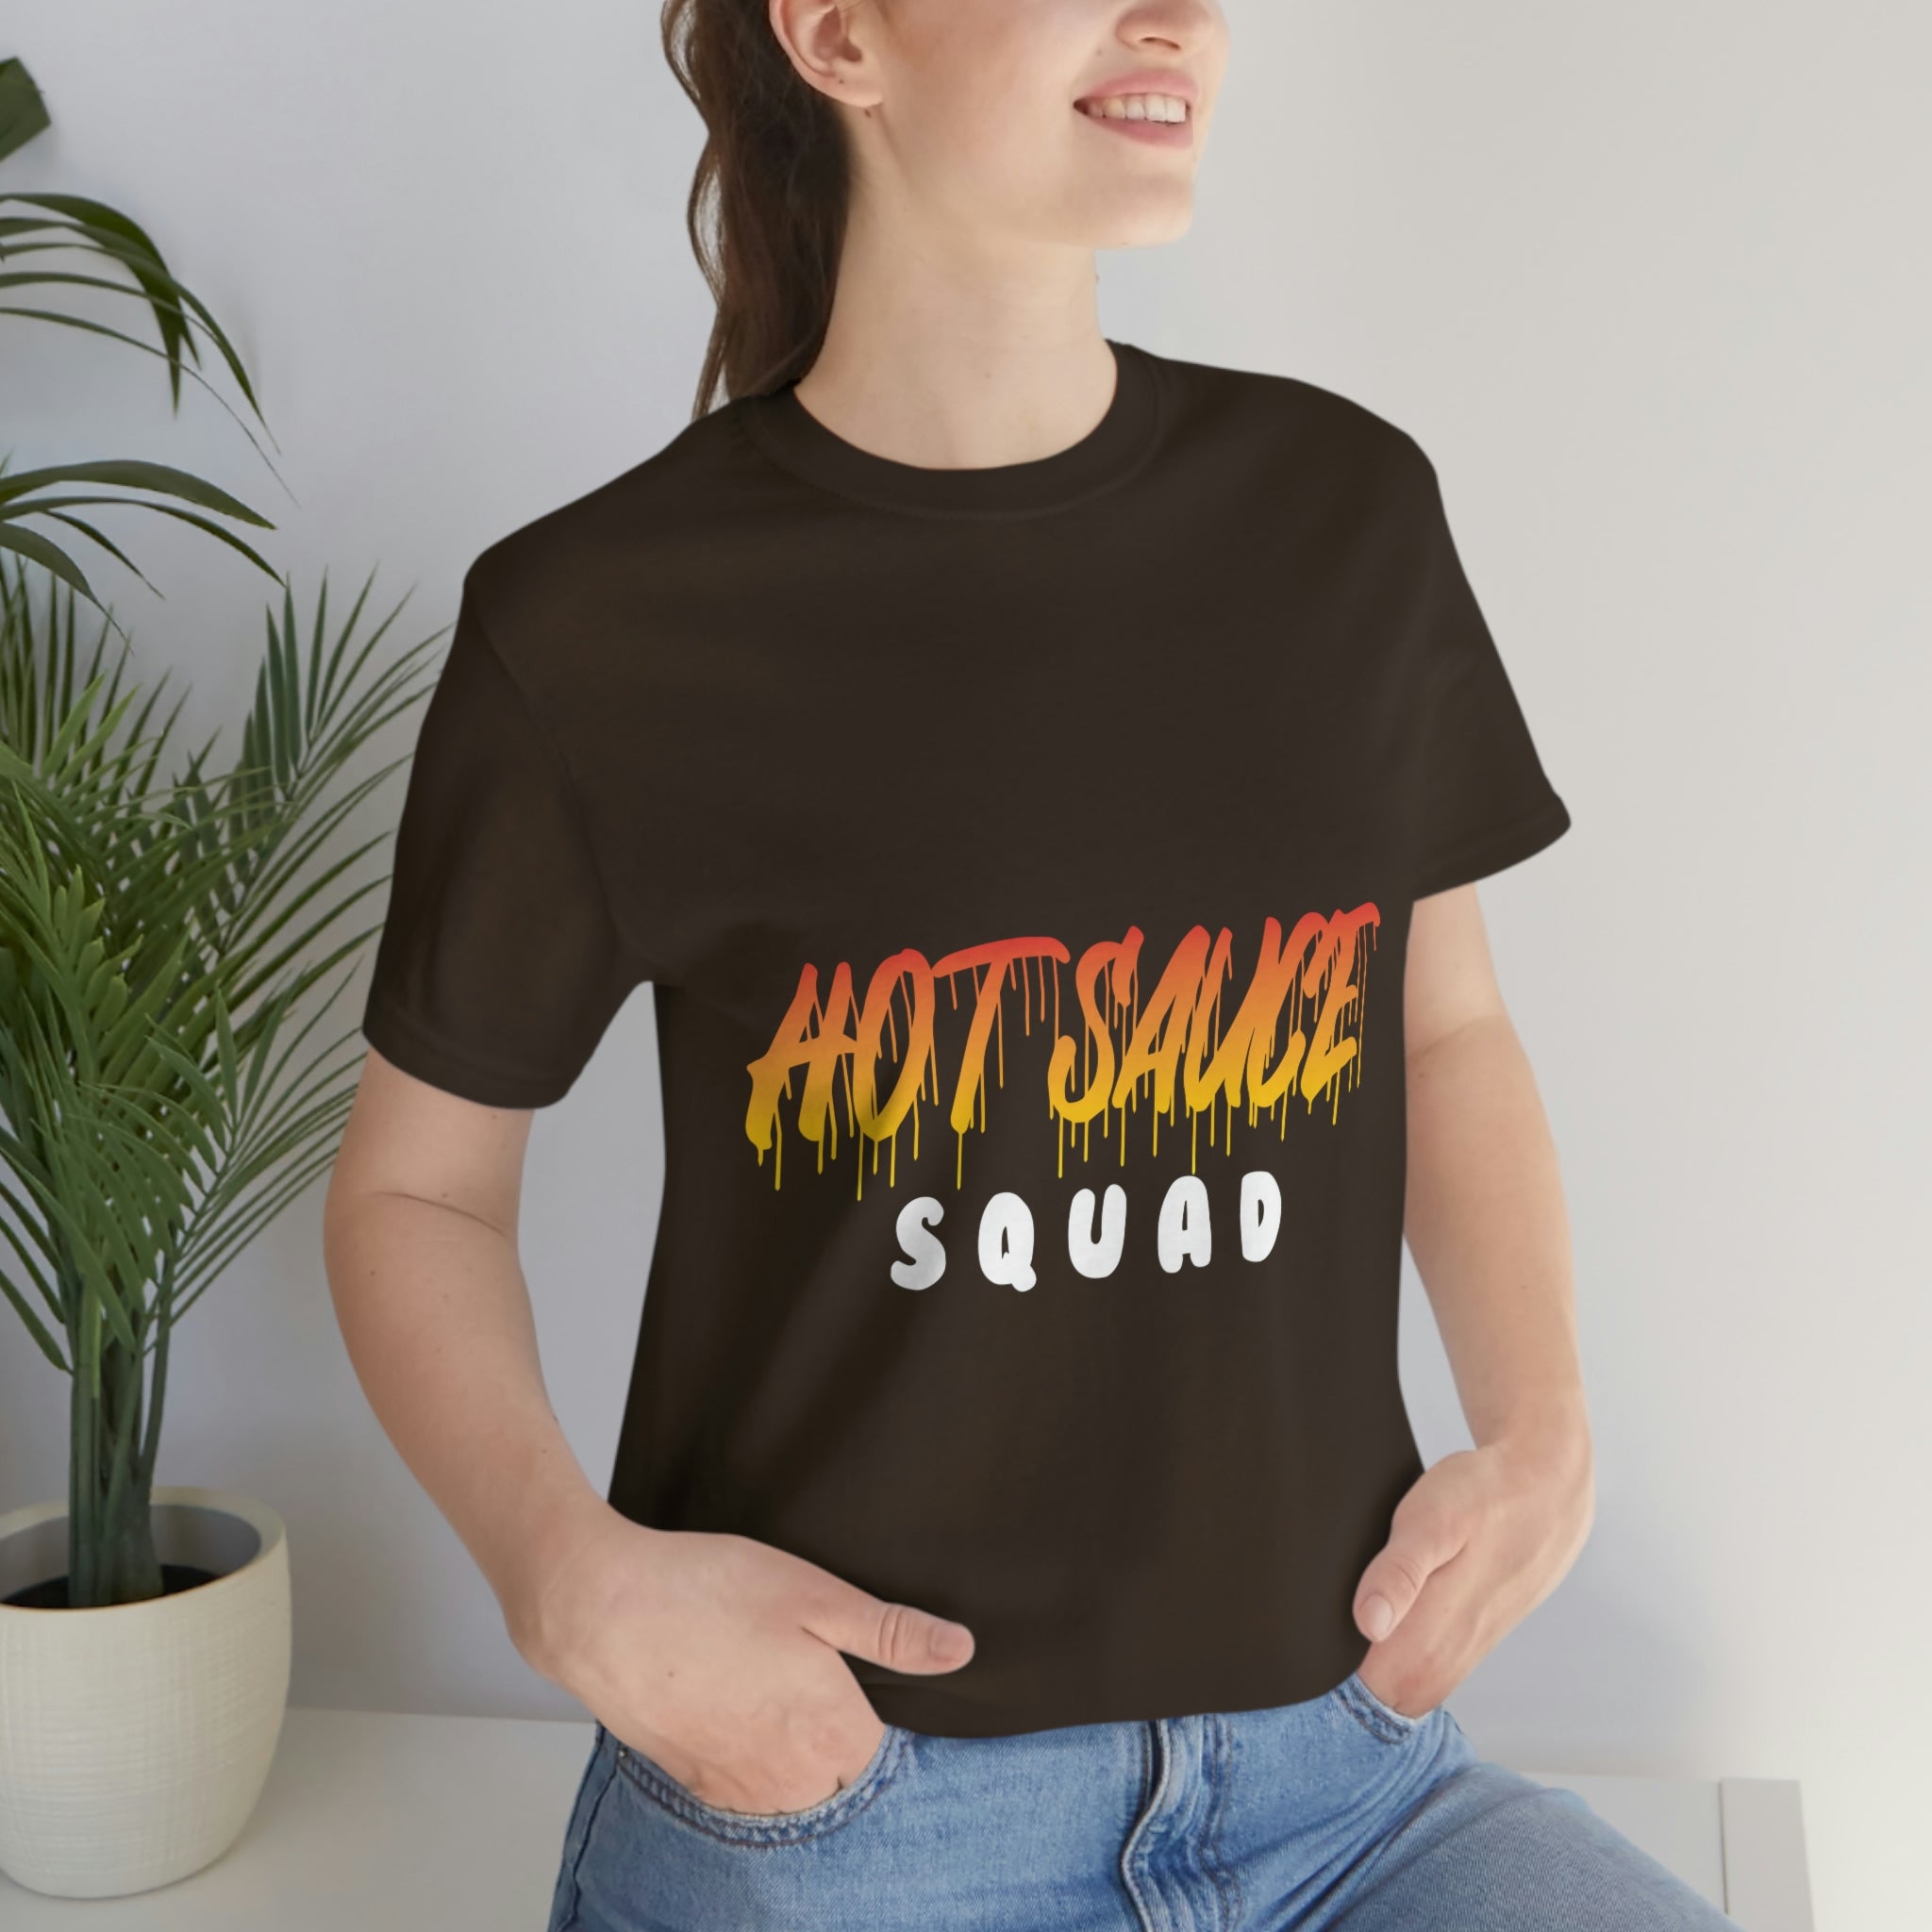 Hot Sauce Squad T-shirt